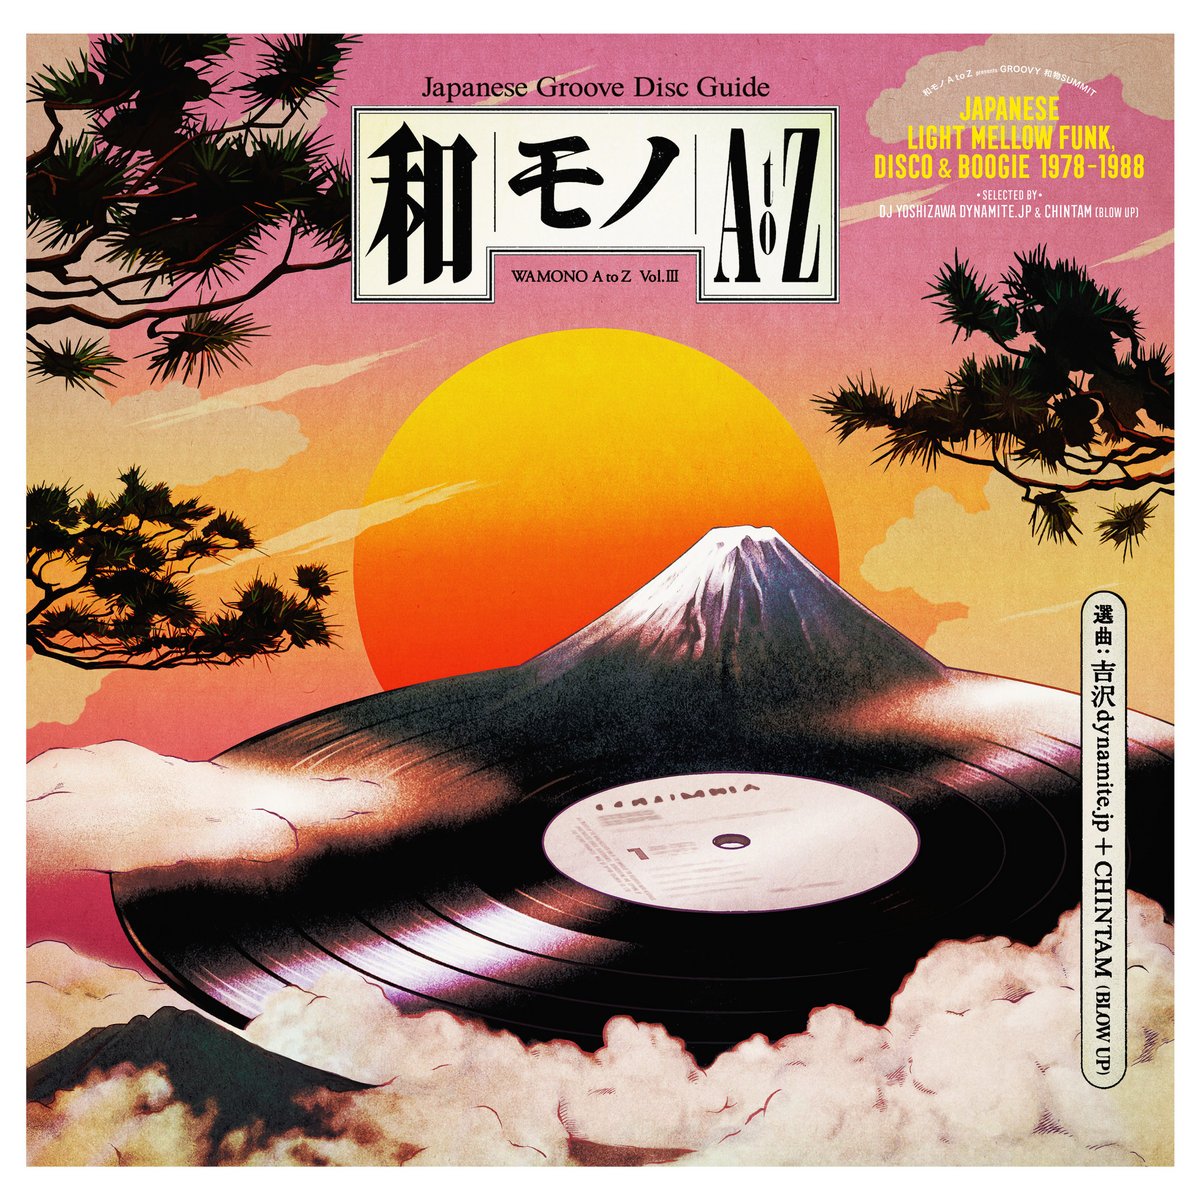 |v/a| "WAMONO A to Z Vol. III - Japanese Light Mellow Funk, Disco & Boogie 1978-1988"